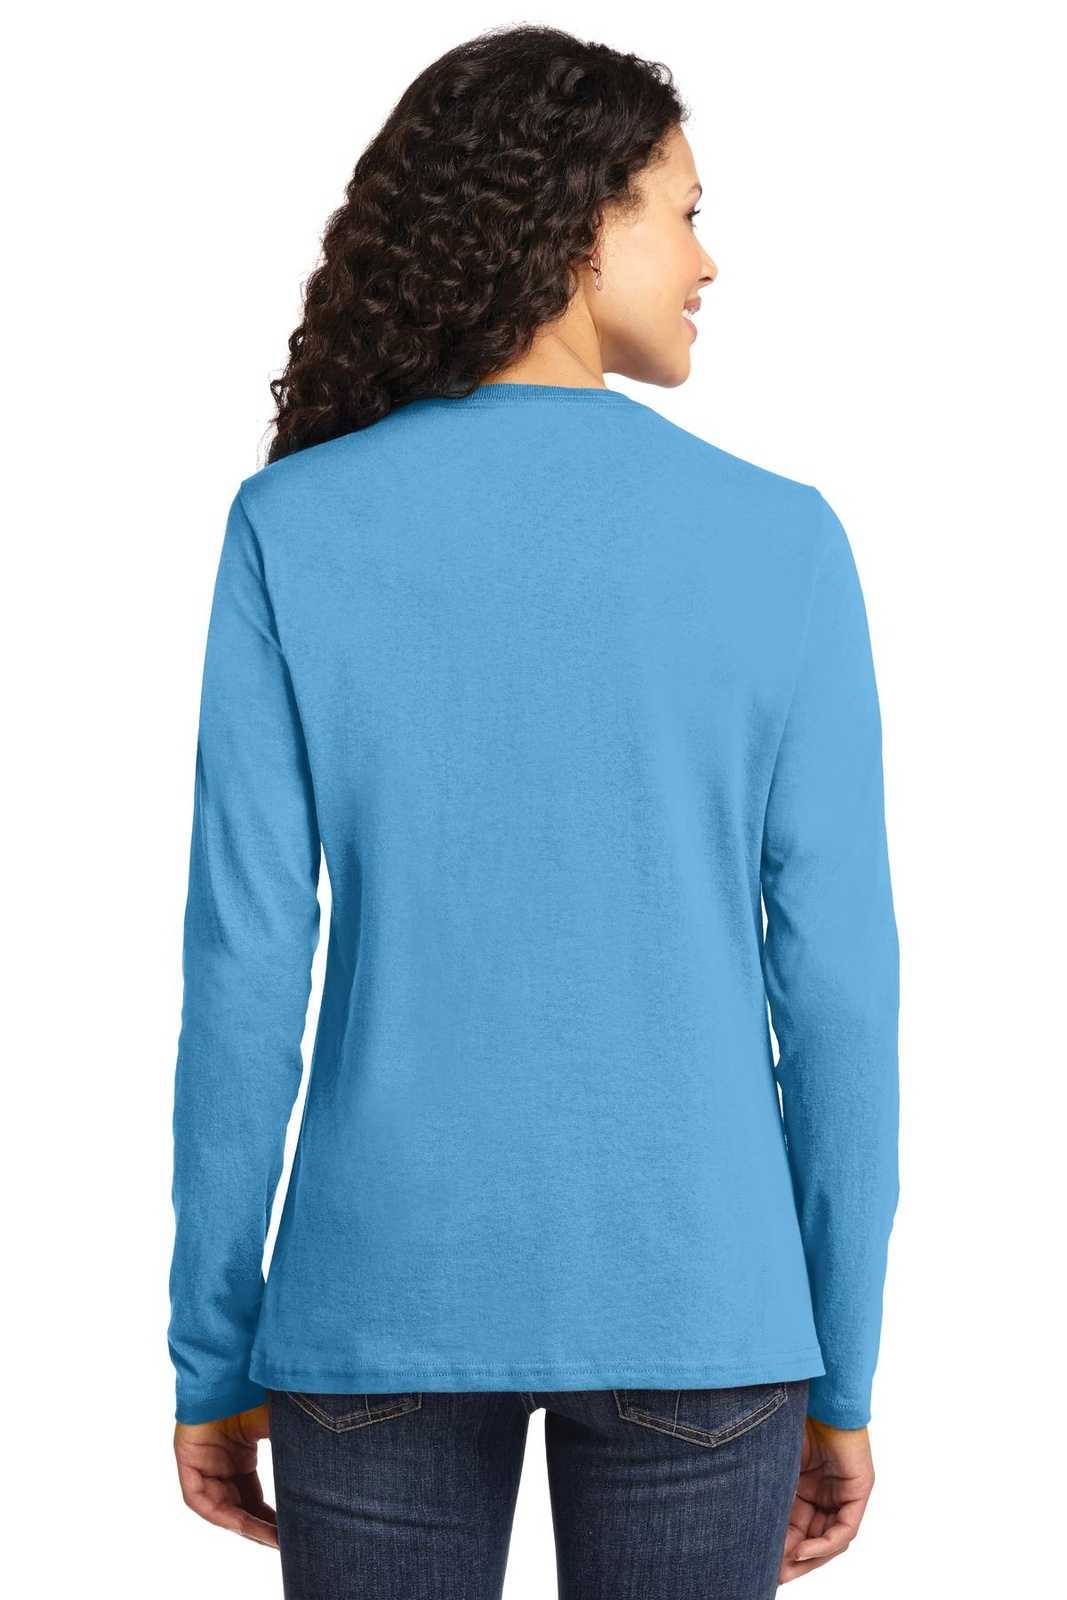 Port &amp; Company LPC54LS Ladies Long Sleeve Core Cotton Tee - Aquatic Blue - HIT a Double - 2